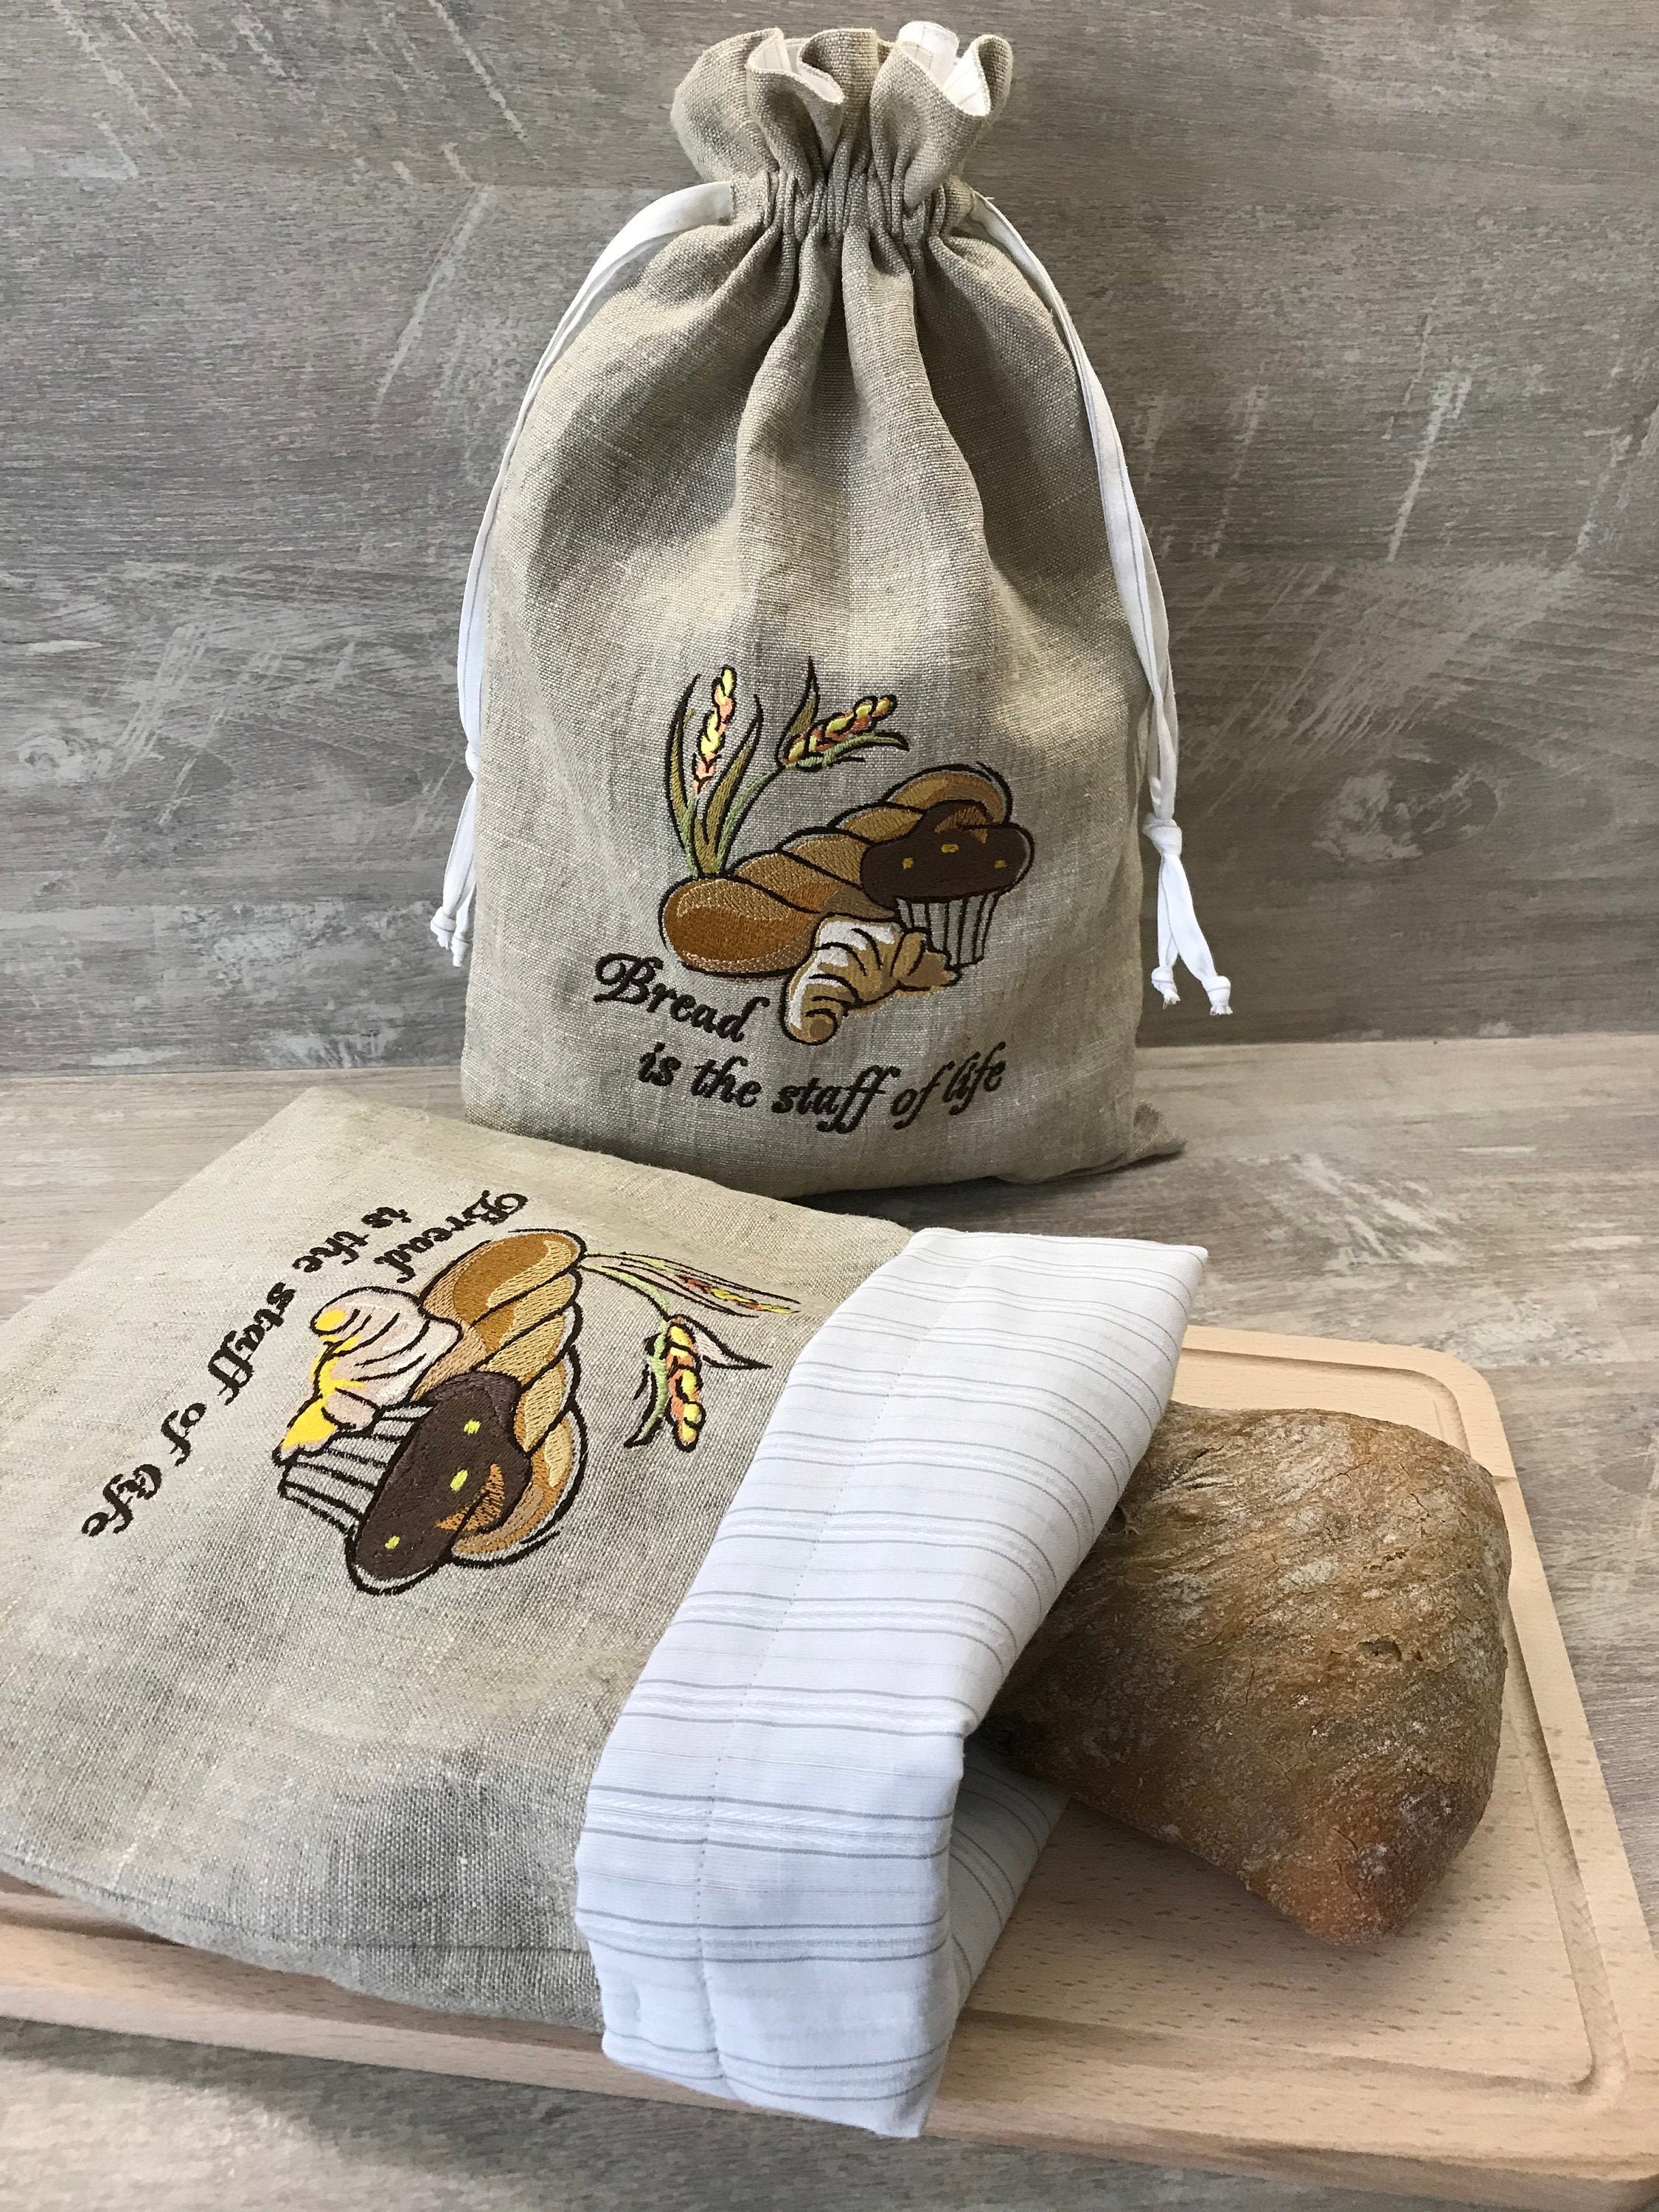 Reusable Bread Bag GOTS Certified Organic Bread Bag Bakery Bag for